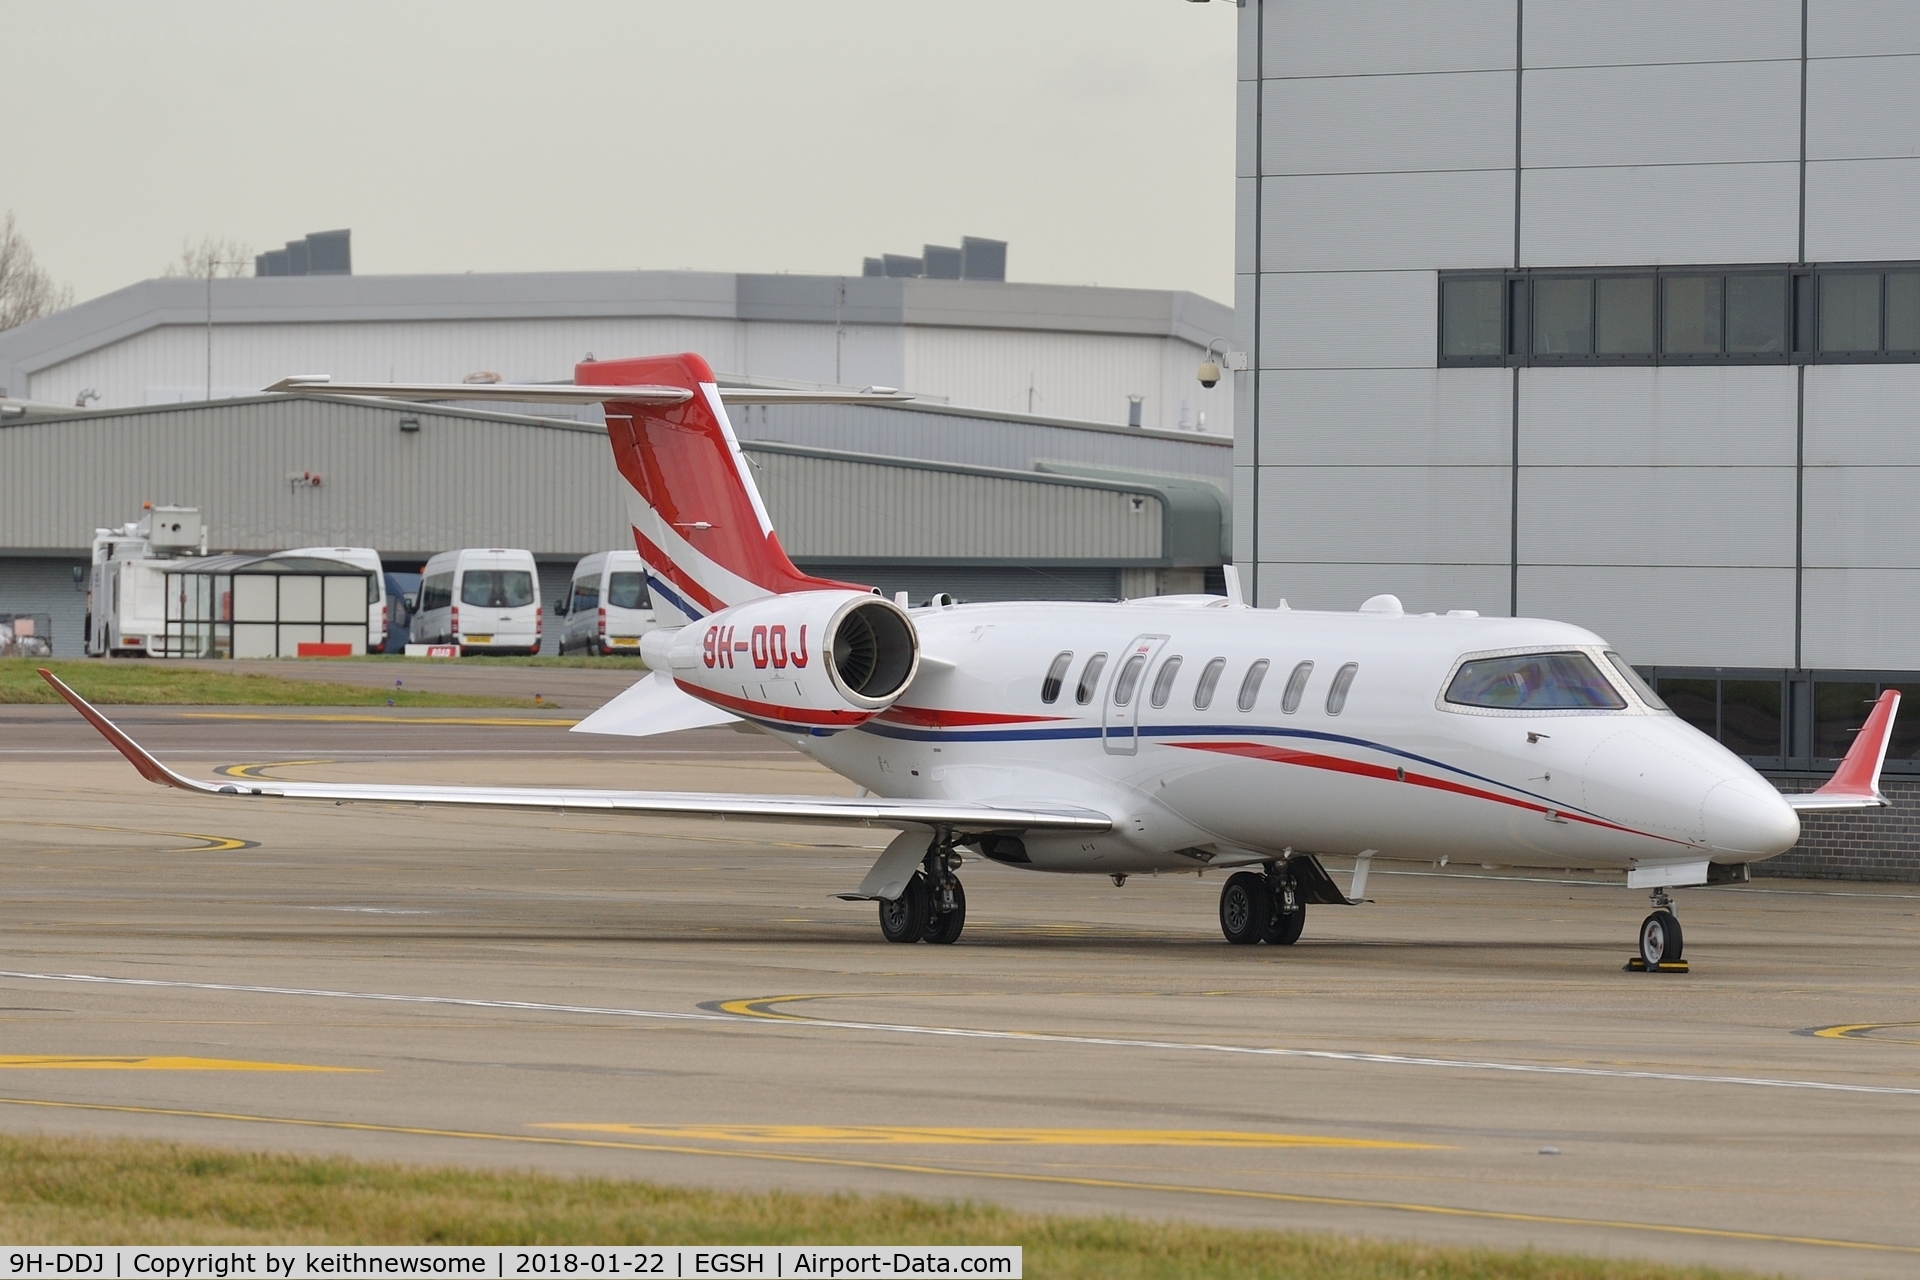 9H-DDJ, 2014 Learjet 75 C/N 45-494, Nice Visitor.